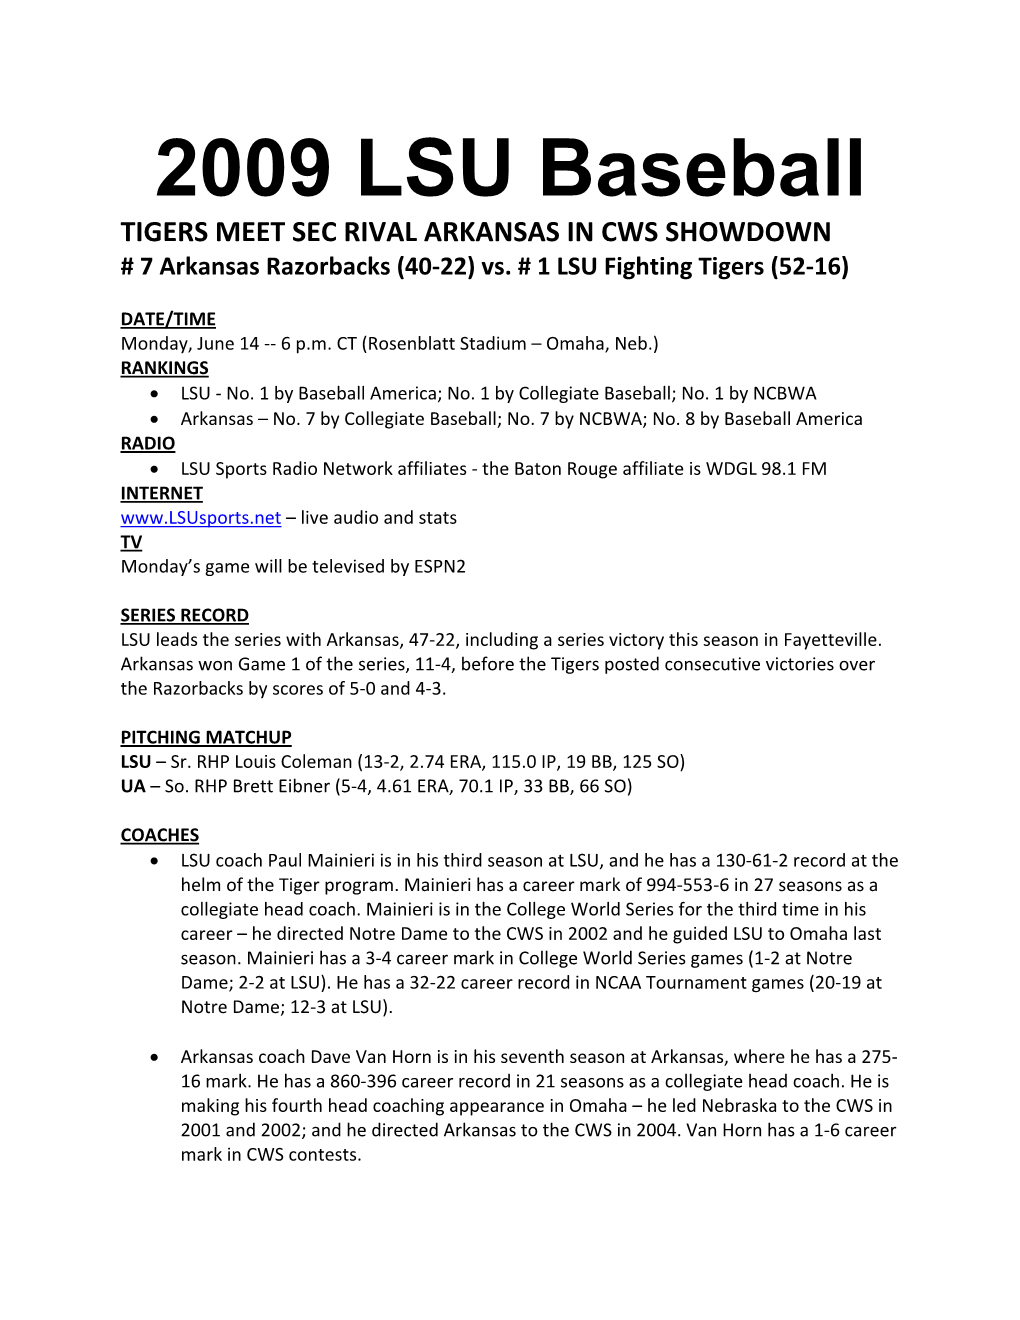 2009 LSU Baseball TIGERS MEET SEC RIVAL ARKANSAS in CWS SHOWDOWN # 7 Arkansas Razorbacks (40‐22) Vs